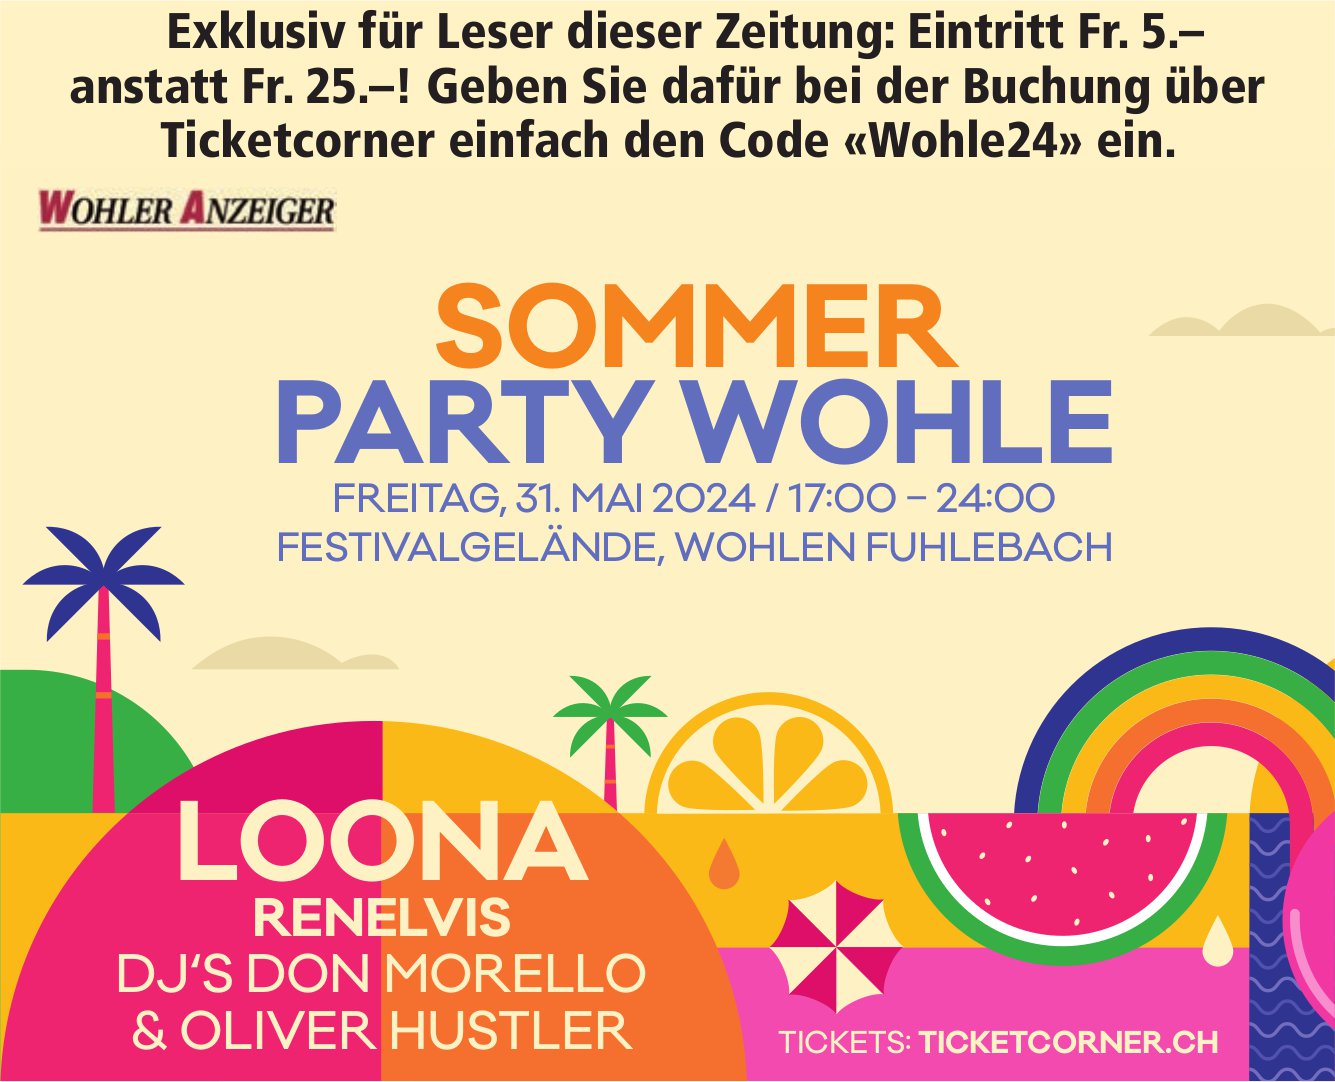 Sommer Party, 31. Mai, Festivalgelände, Wohlen Fuhlebach